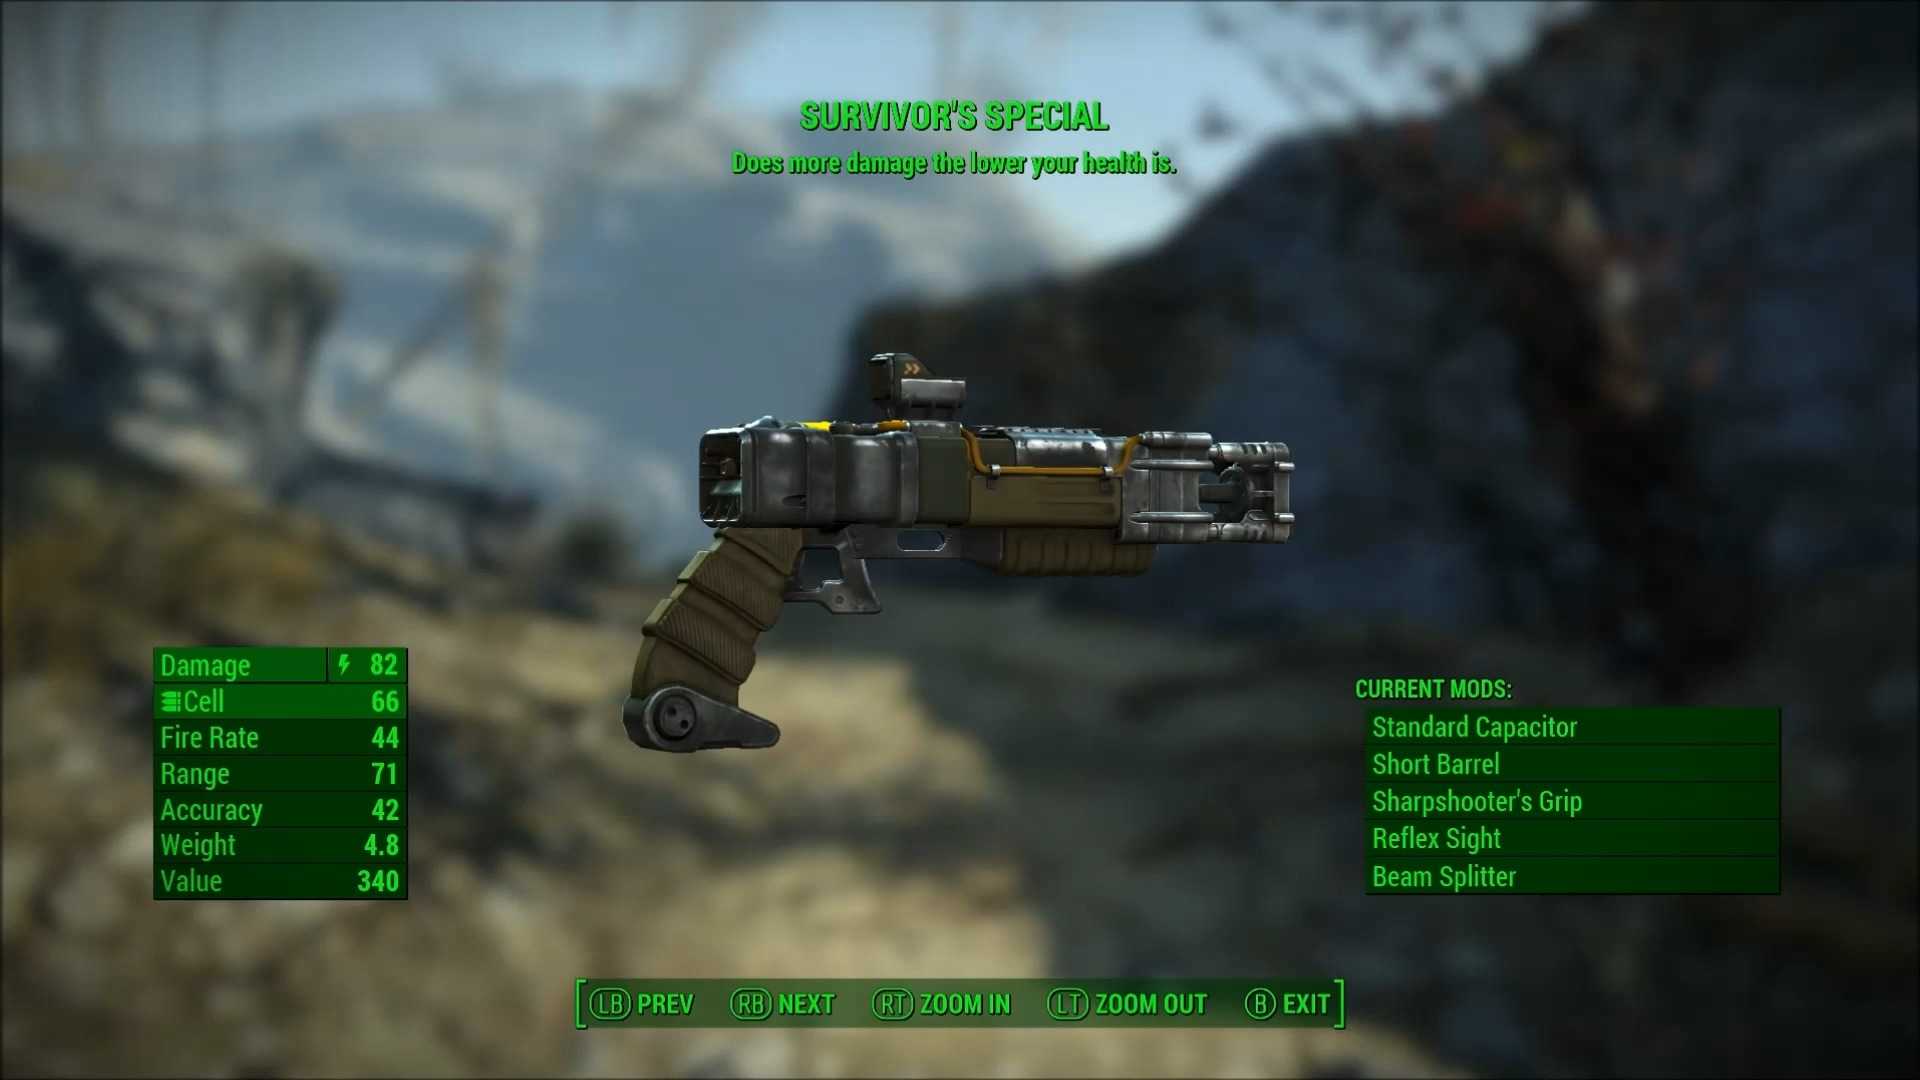 Survivor's Special in Fallout 4